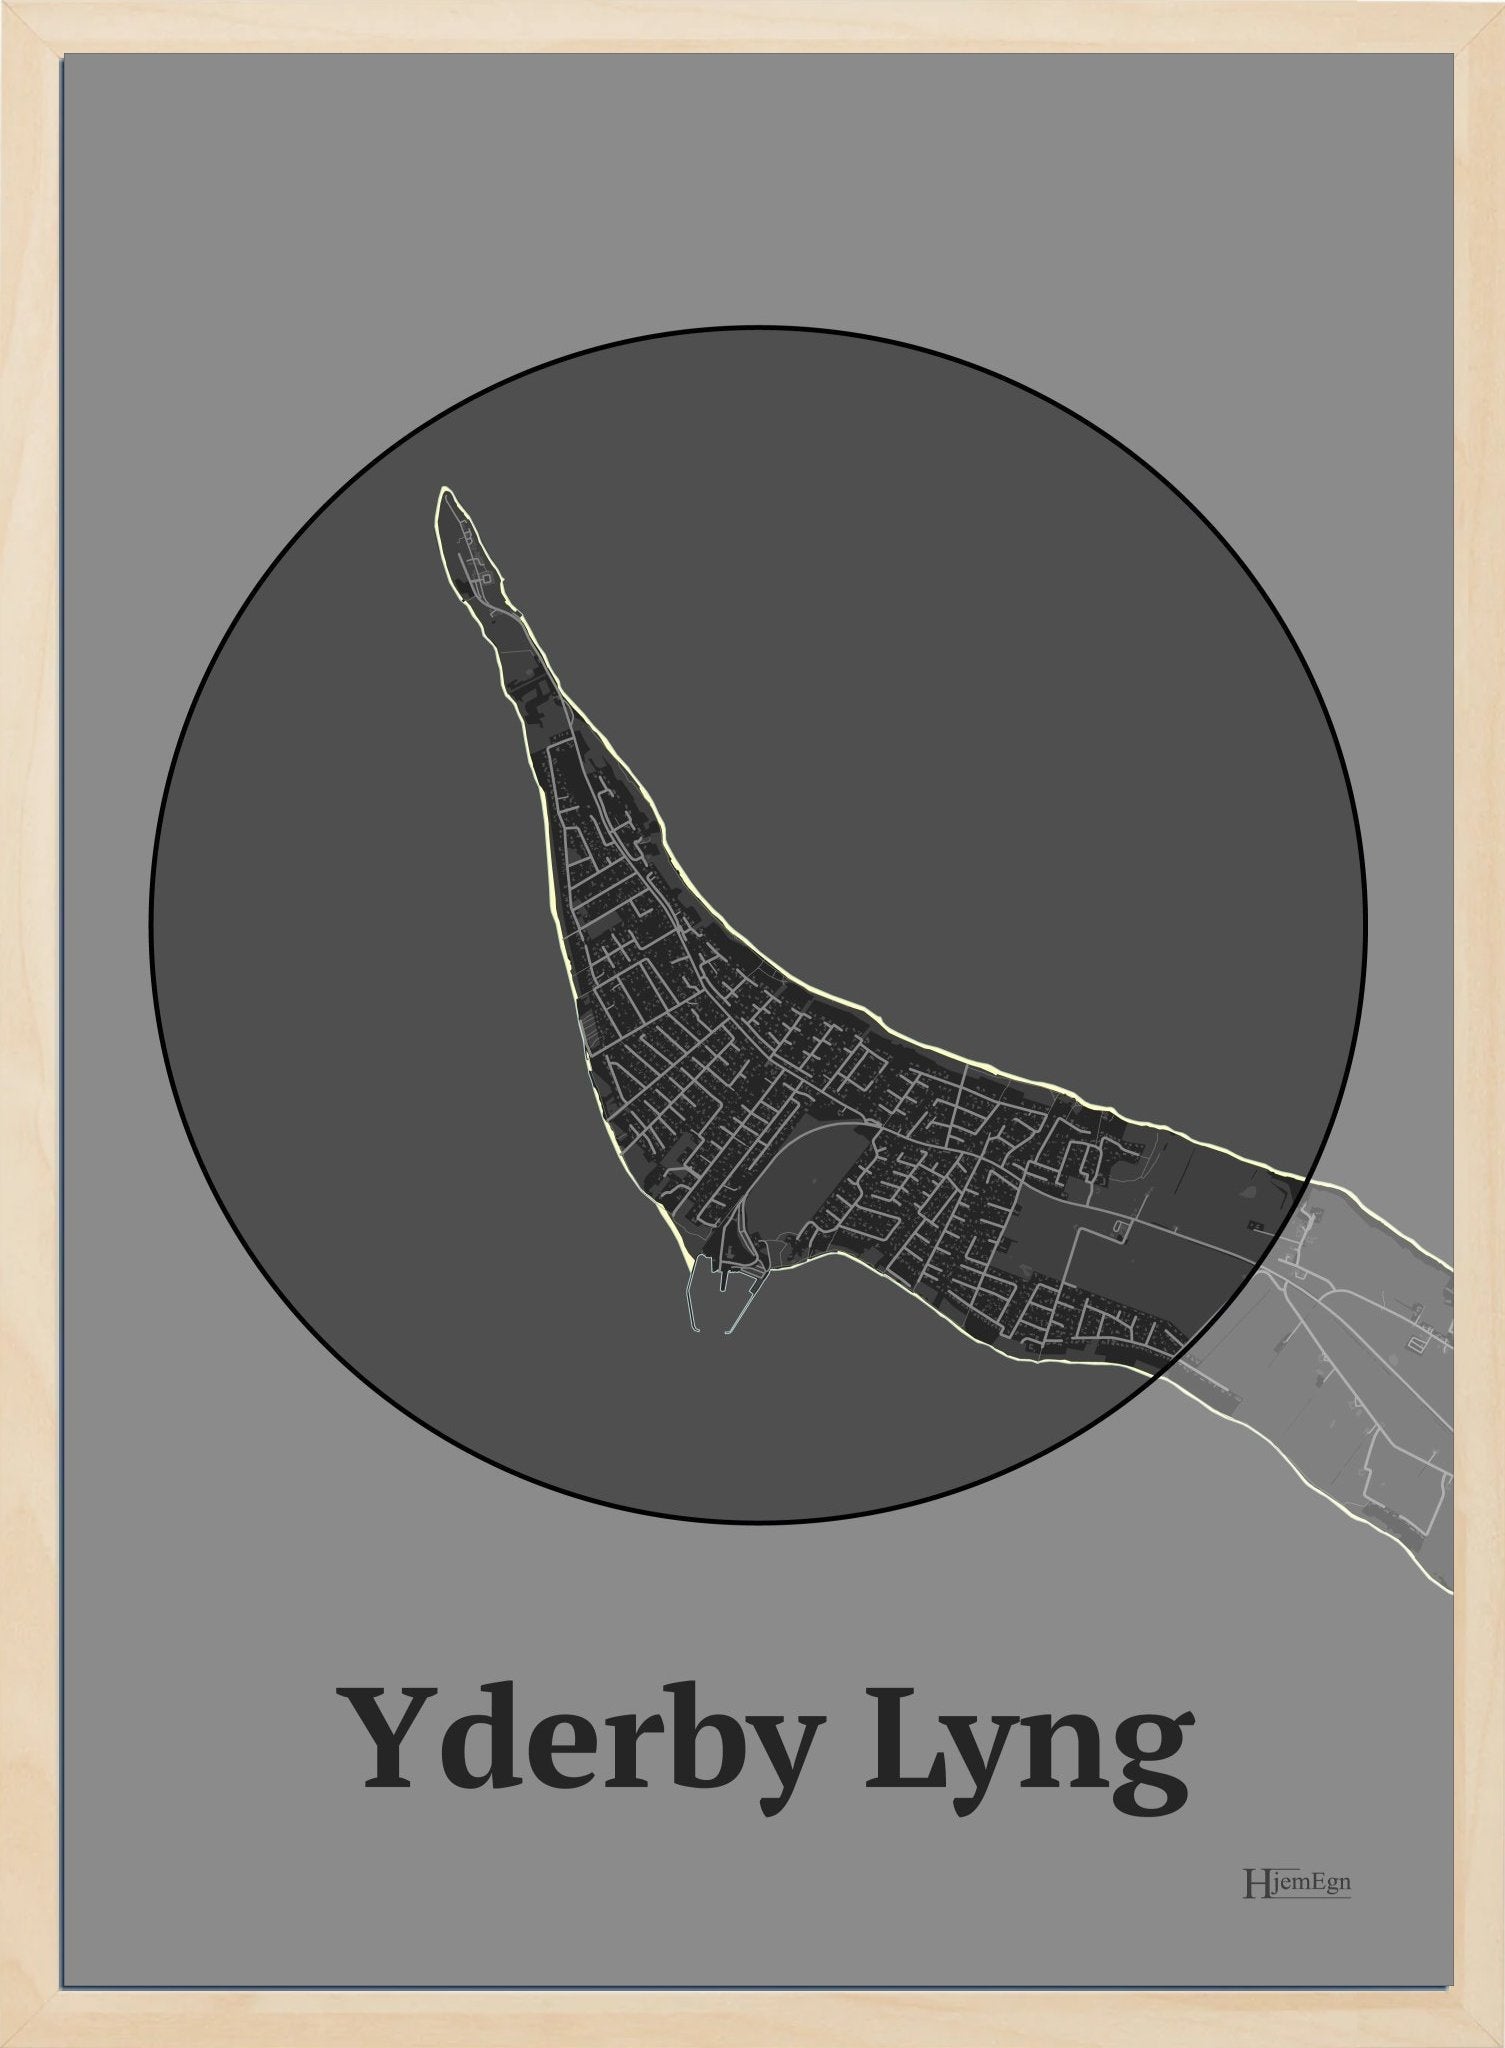 Yderby Lyng plakat i farve mørk grå og HjemEgn.dk design centrum. Design bykort for Yderby Lyng